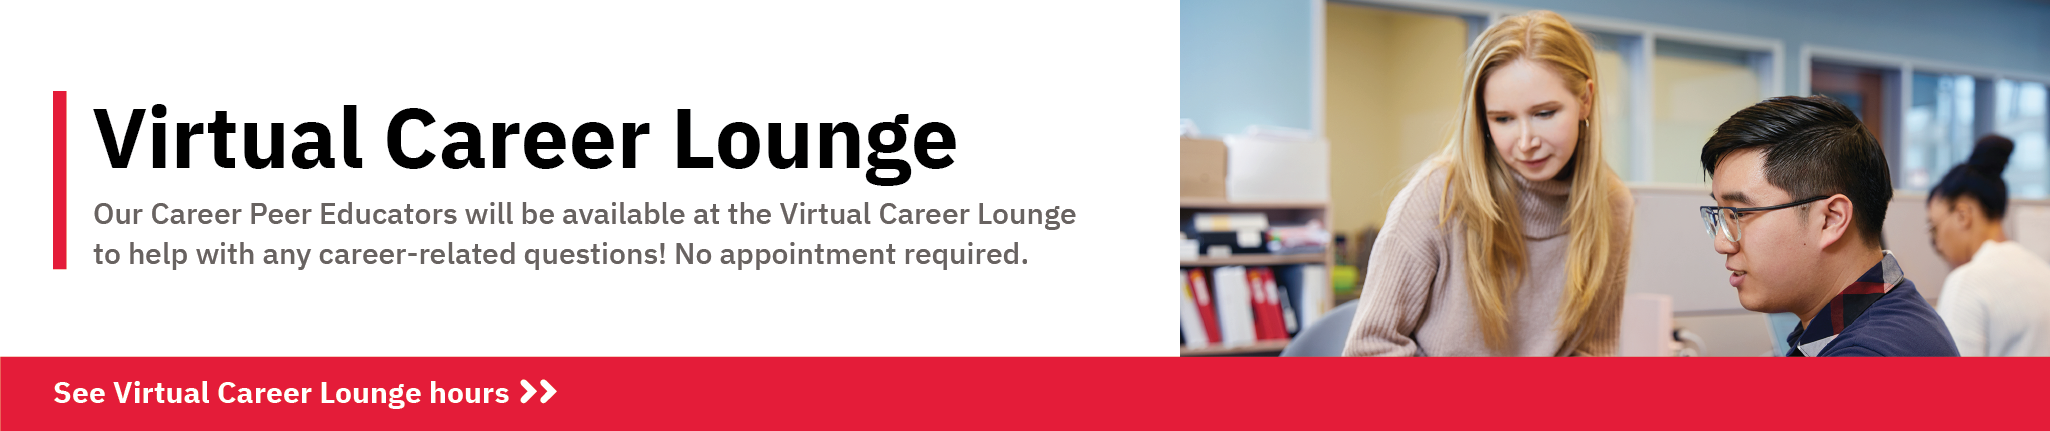 Virtual Career Lounge